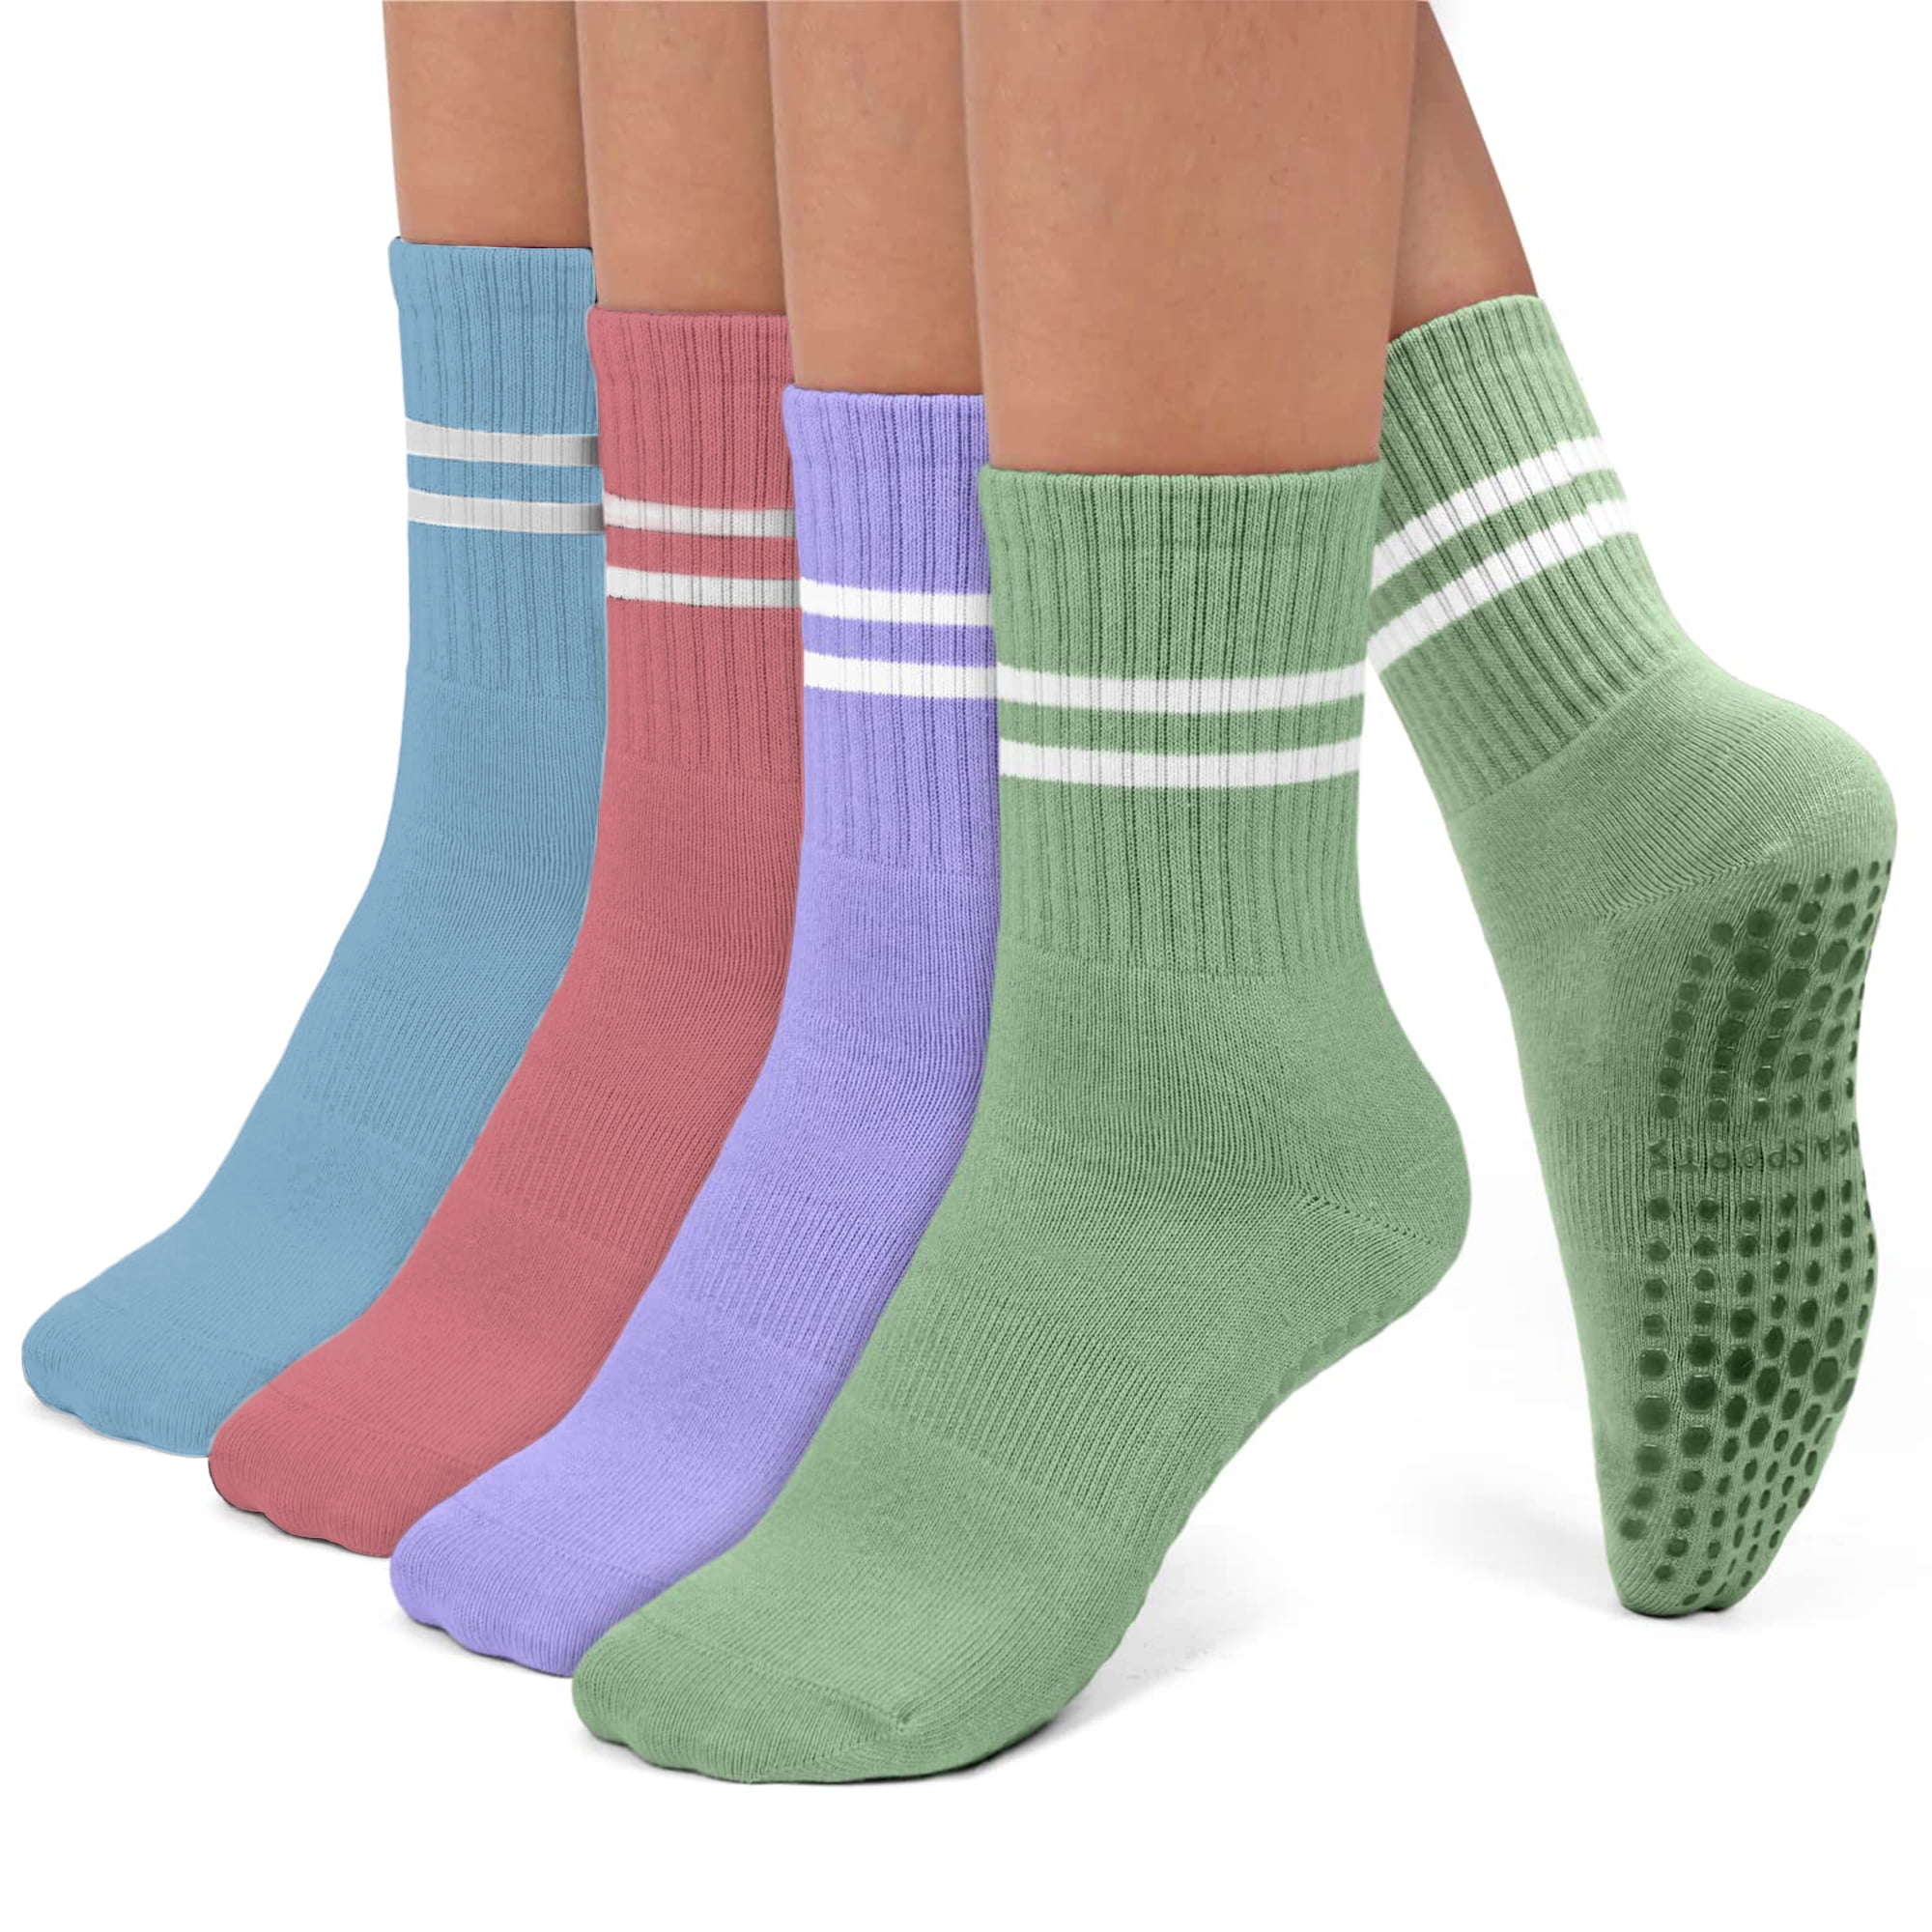  Geyoga 10 Pairs Non Slip Yoga Socks Anti Skid Sticky Grippers  Socks Hospital Slipper Socks for Men Women Pilates Ballet Barre (Classic  Colors) : Clothing, Shoes & Jewelry